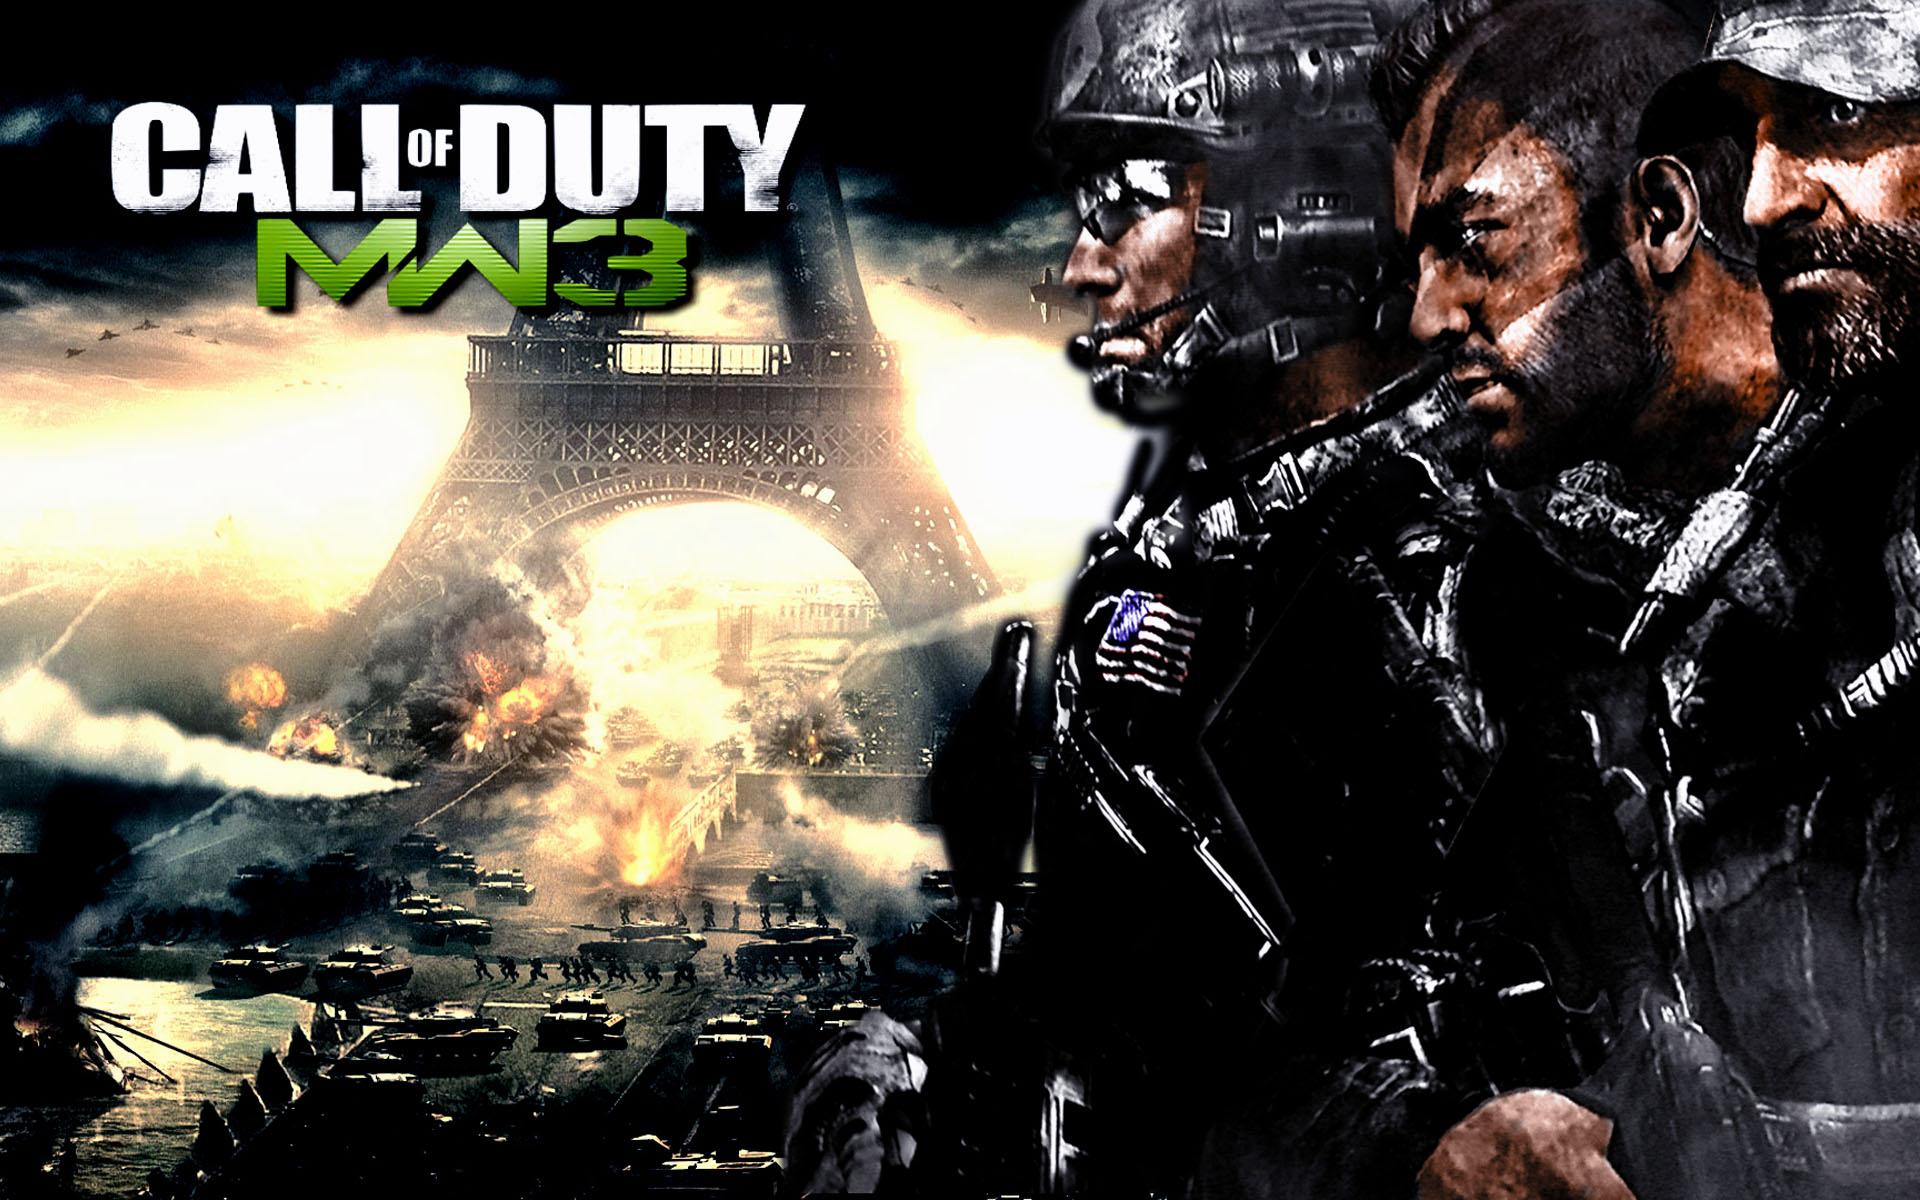 Call of Duty: Modern Warfare 3. Die Hard scenario